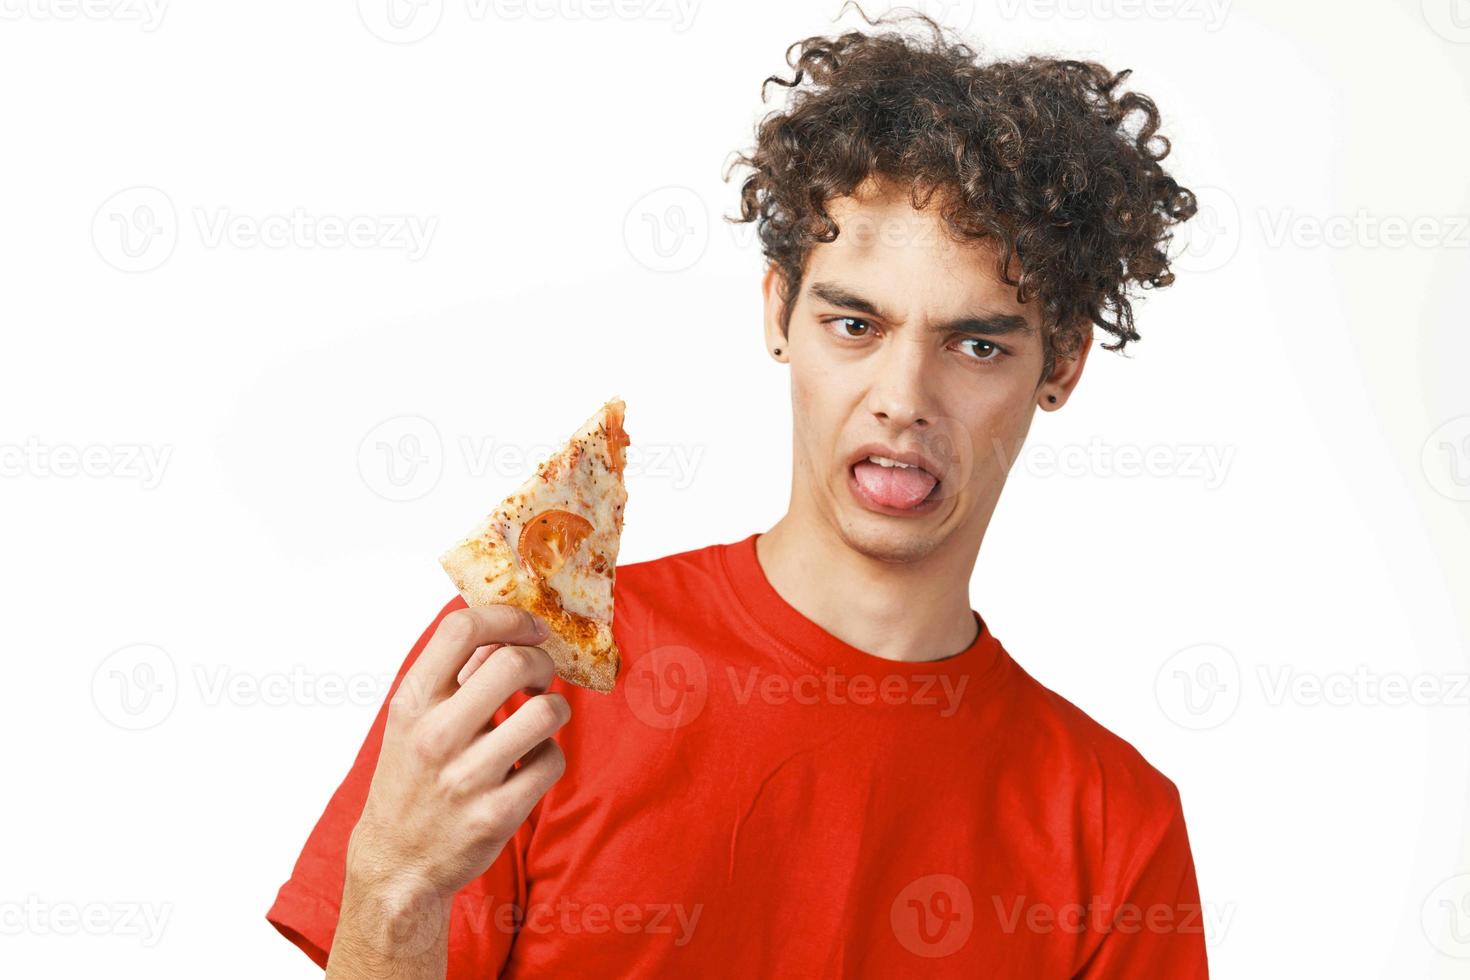 vent in rood t-shirt snel voedsel eetpatroon voedsel tussendoortje licht achtergrond foto